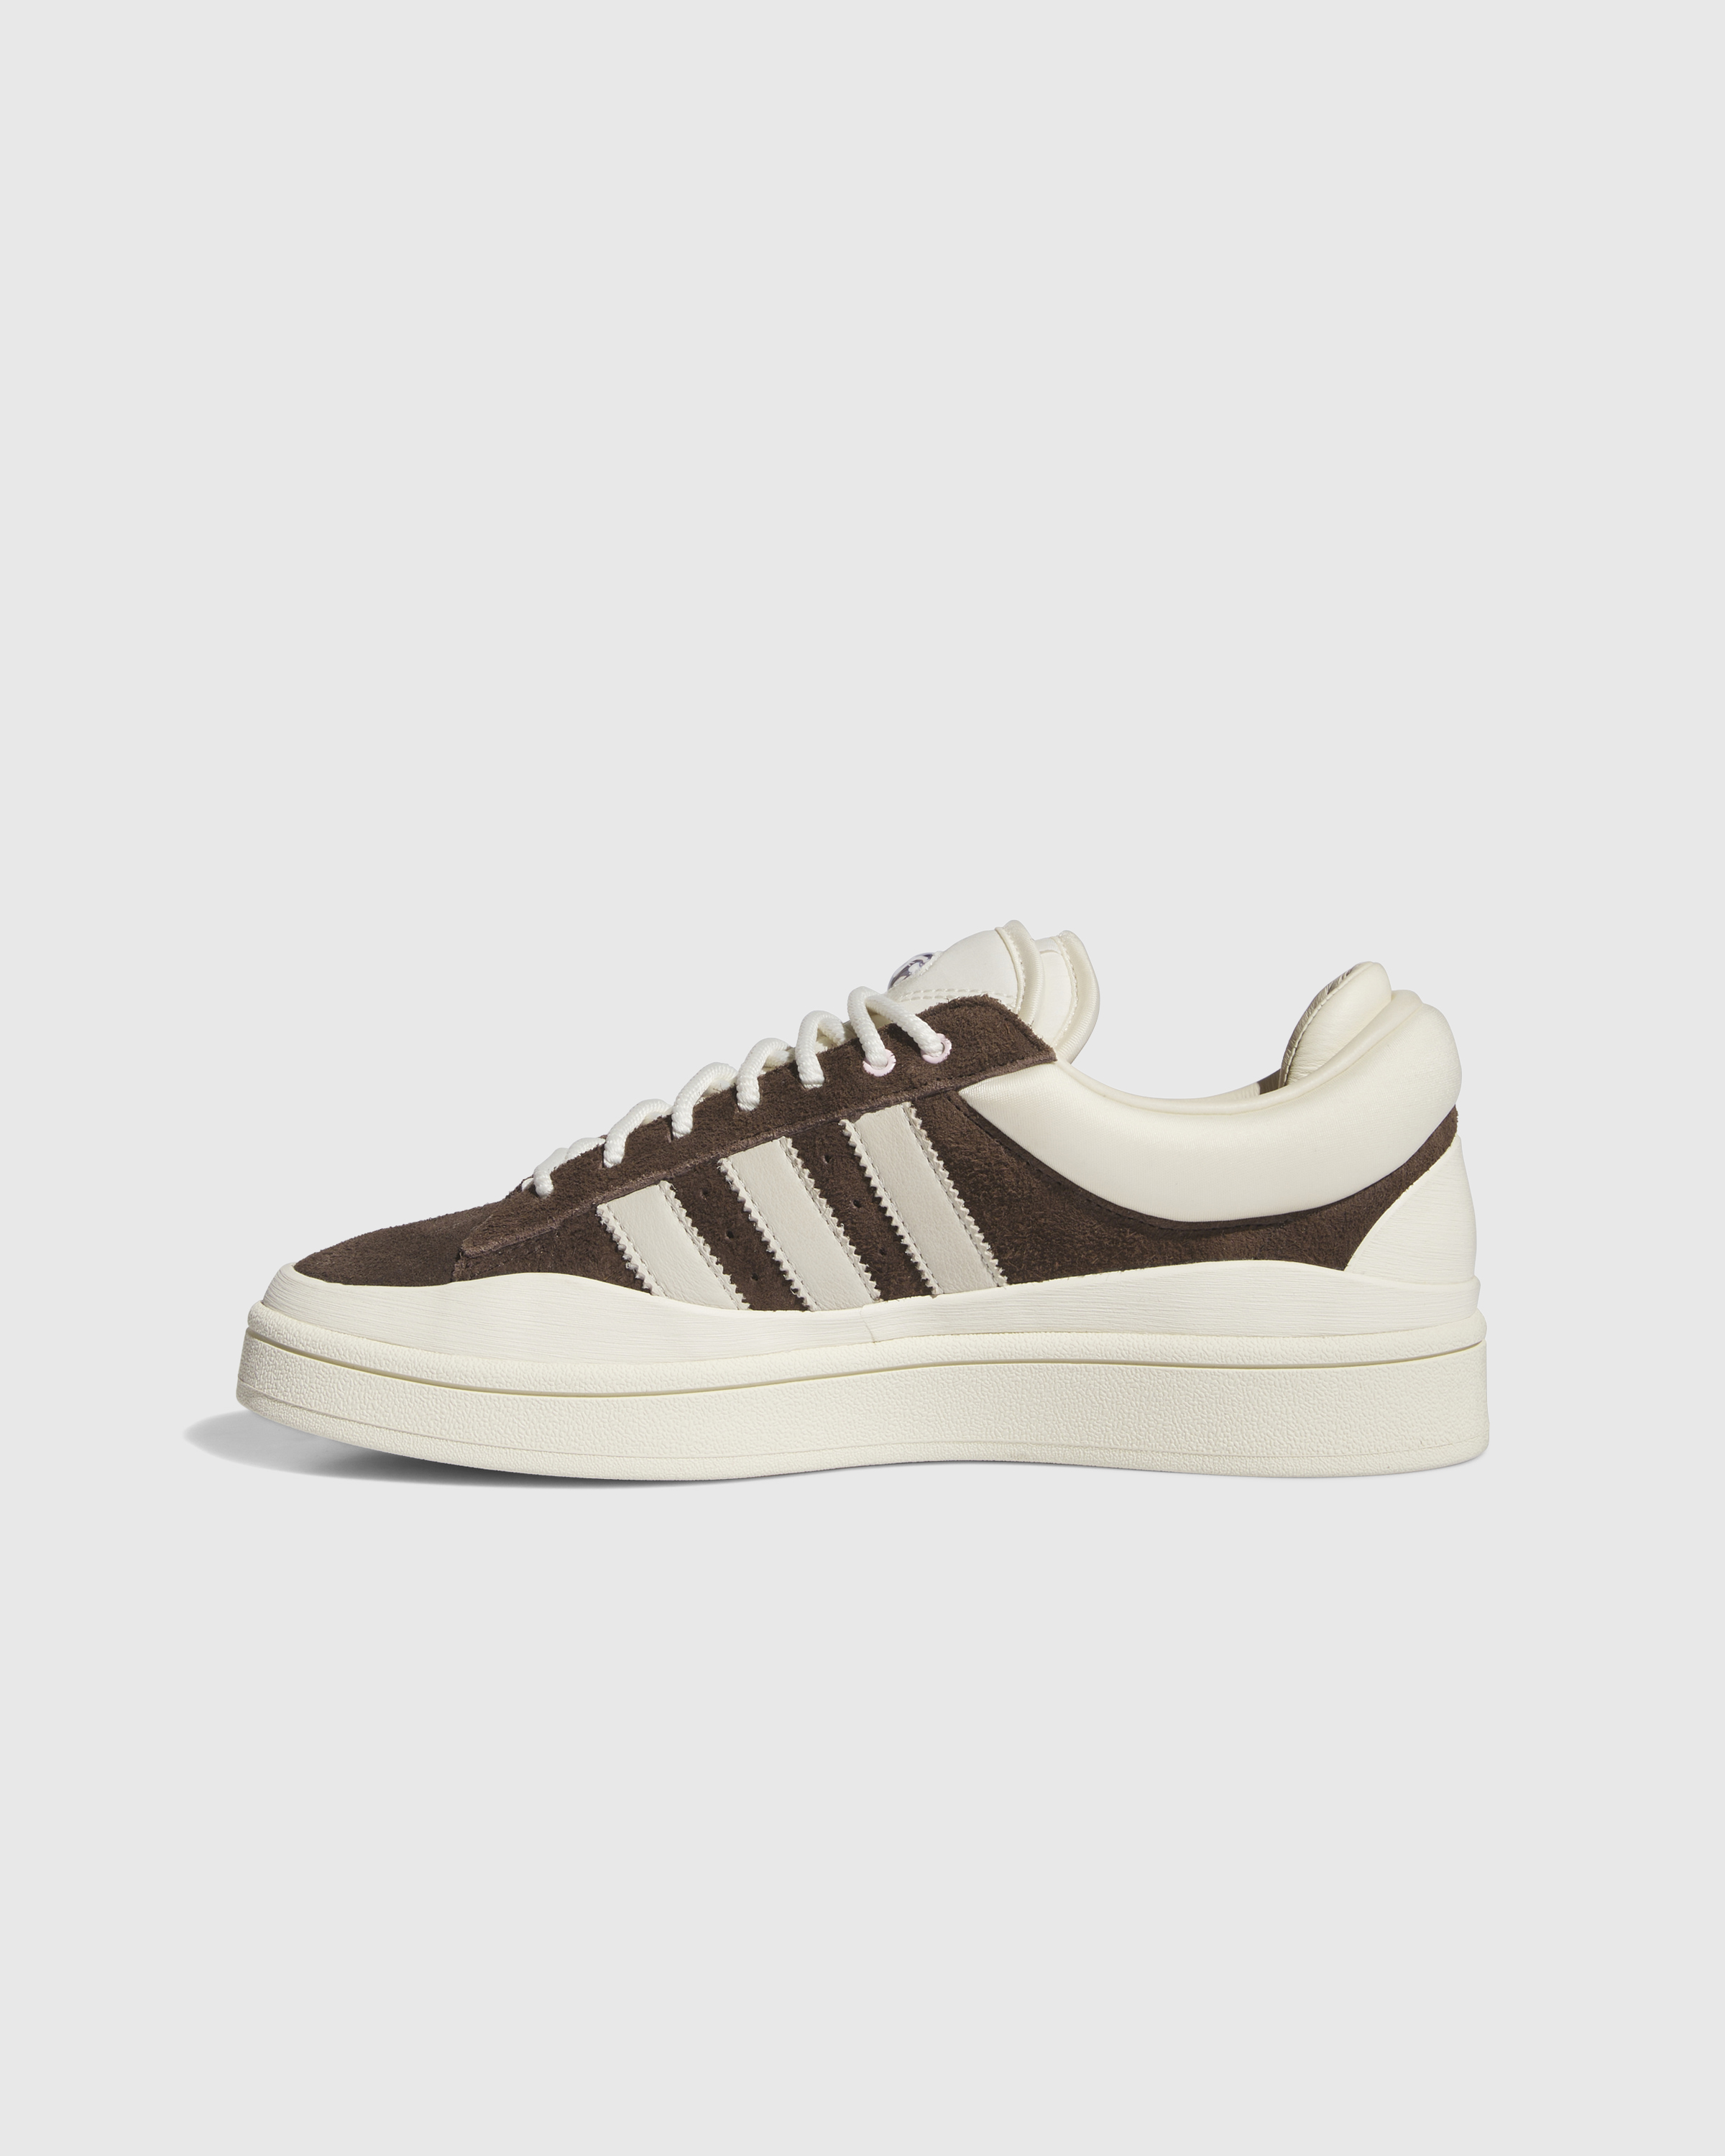 Adidas – Bad Bunny Campus Dark Brown - Sneakers - Brown - Image 2